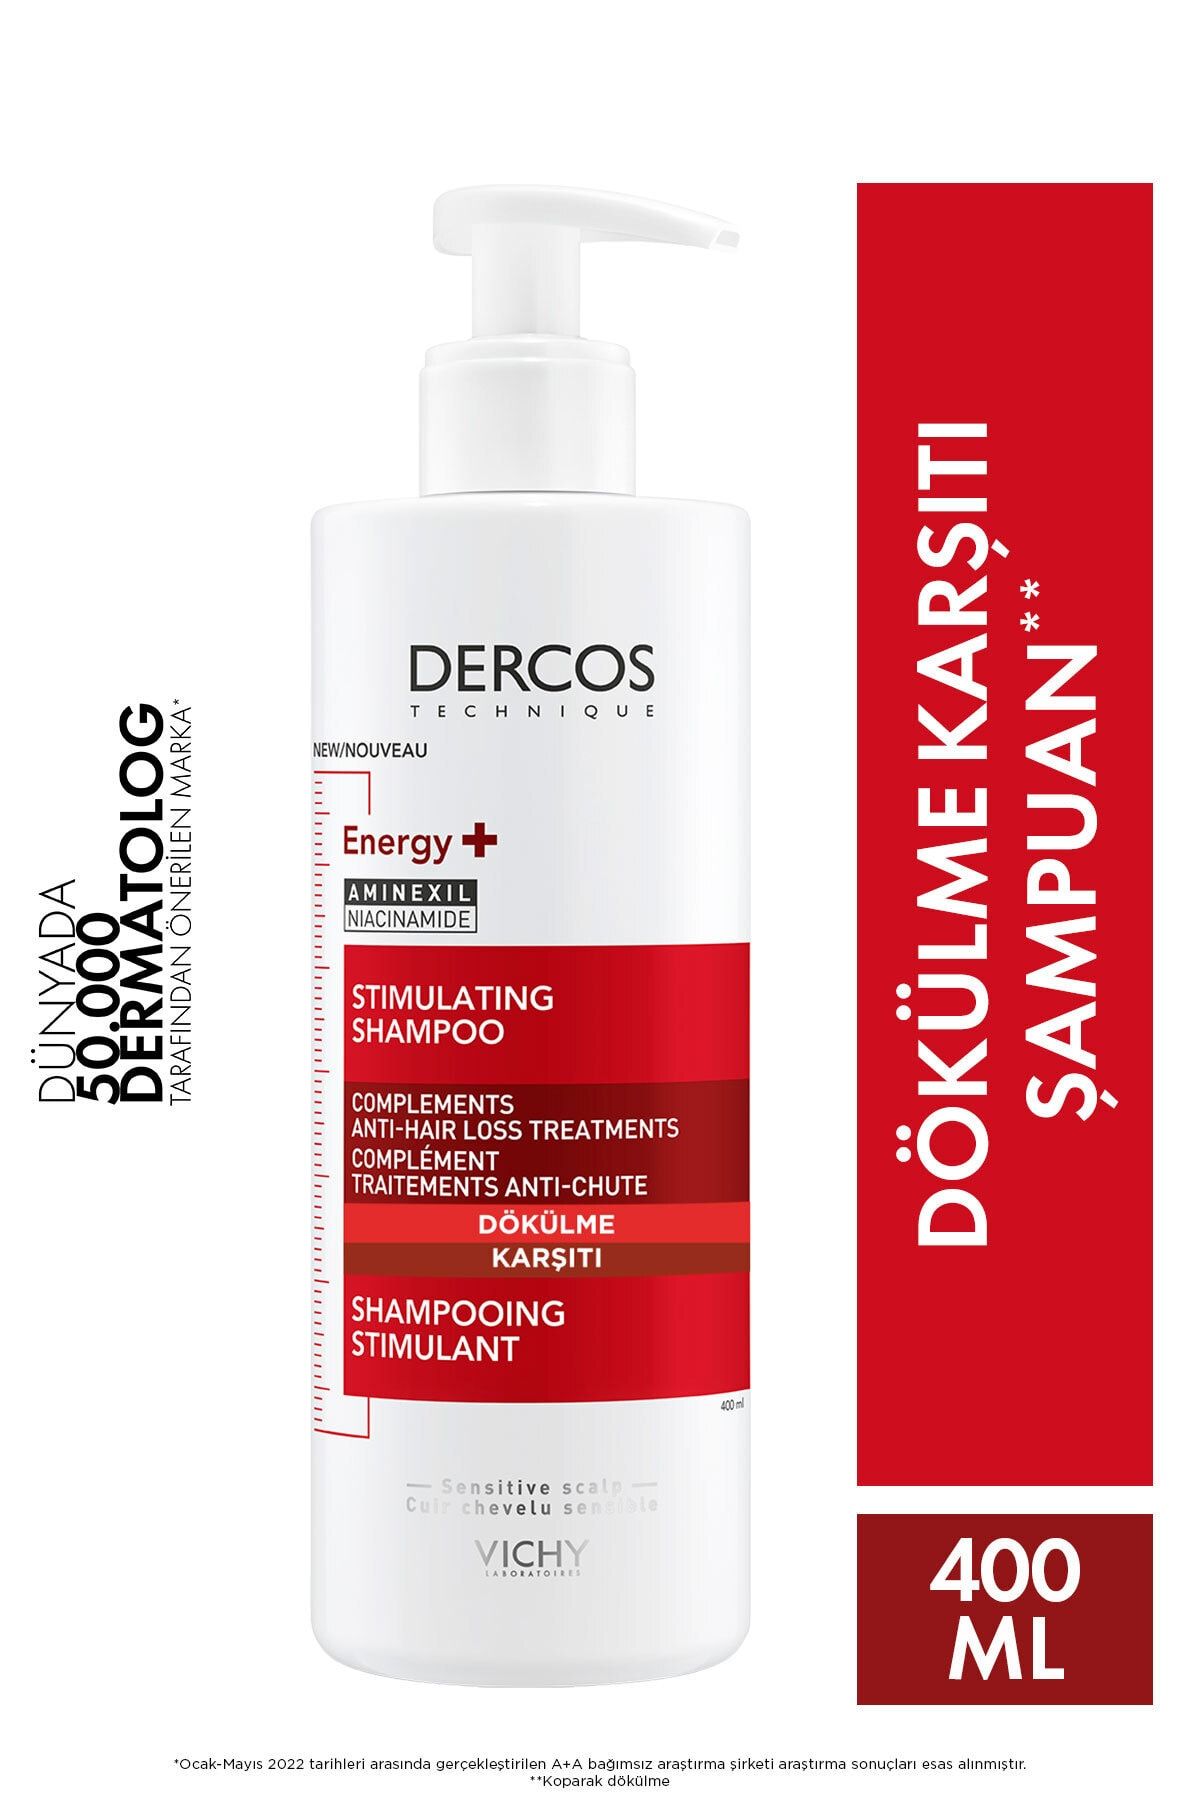 Vichy Dercos Energy Saç Dökülmesi Karşıtı Şampuan 400 ml